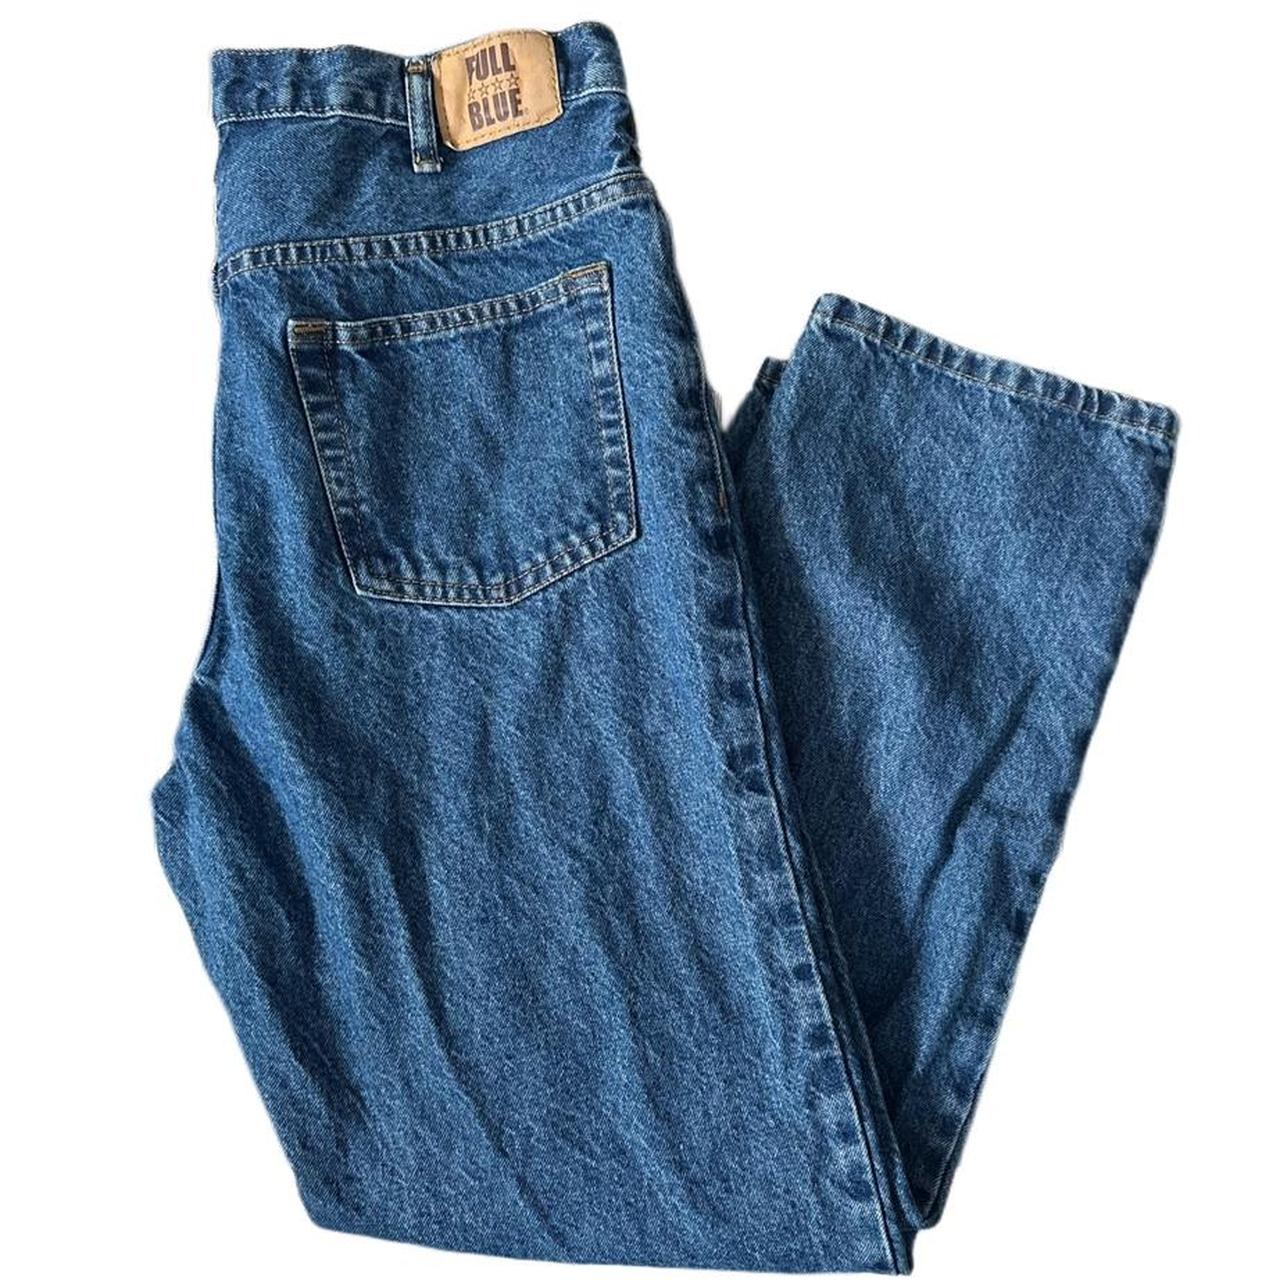 full blue jeans size 34x30 34” waist 12”... - Depop